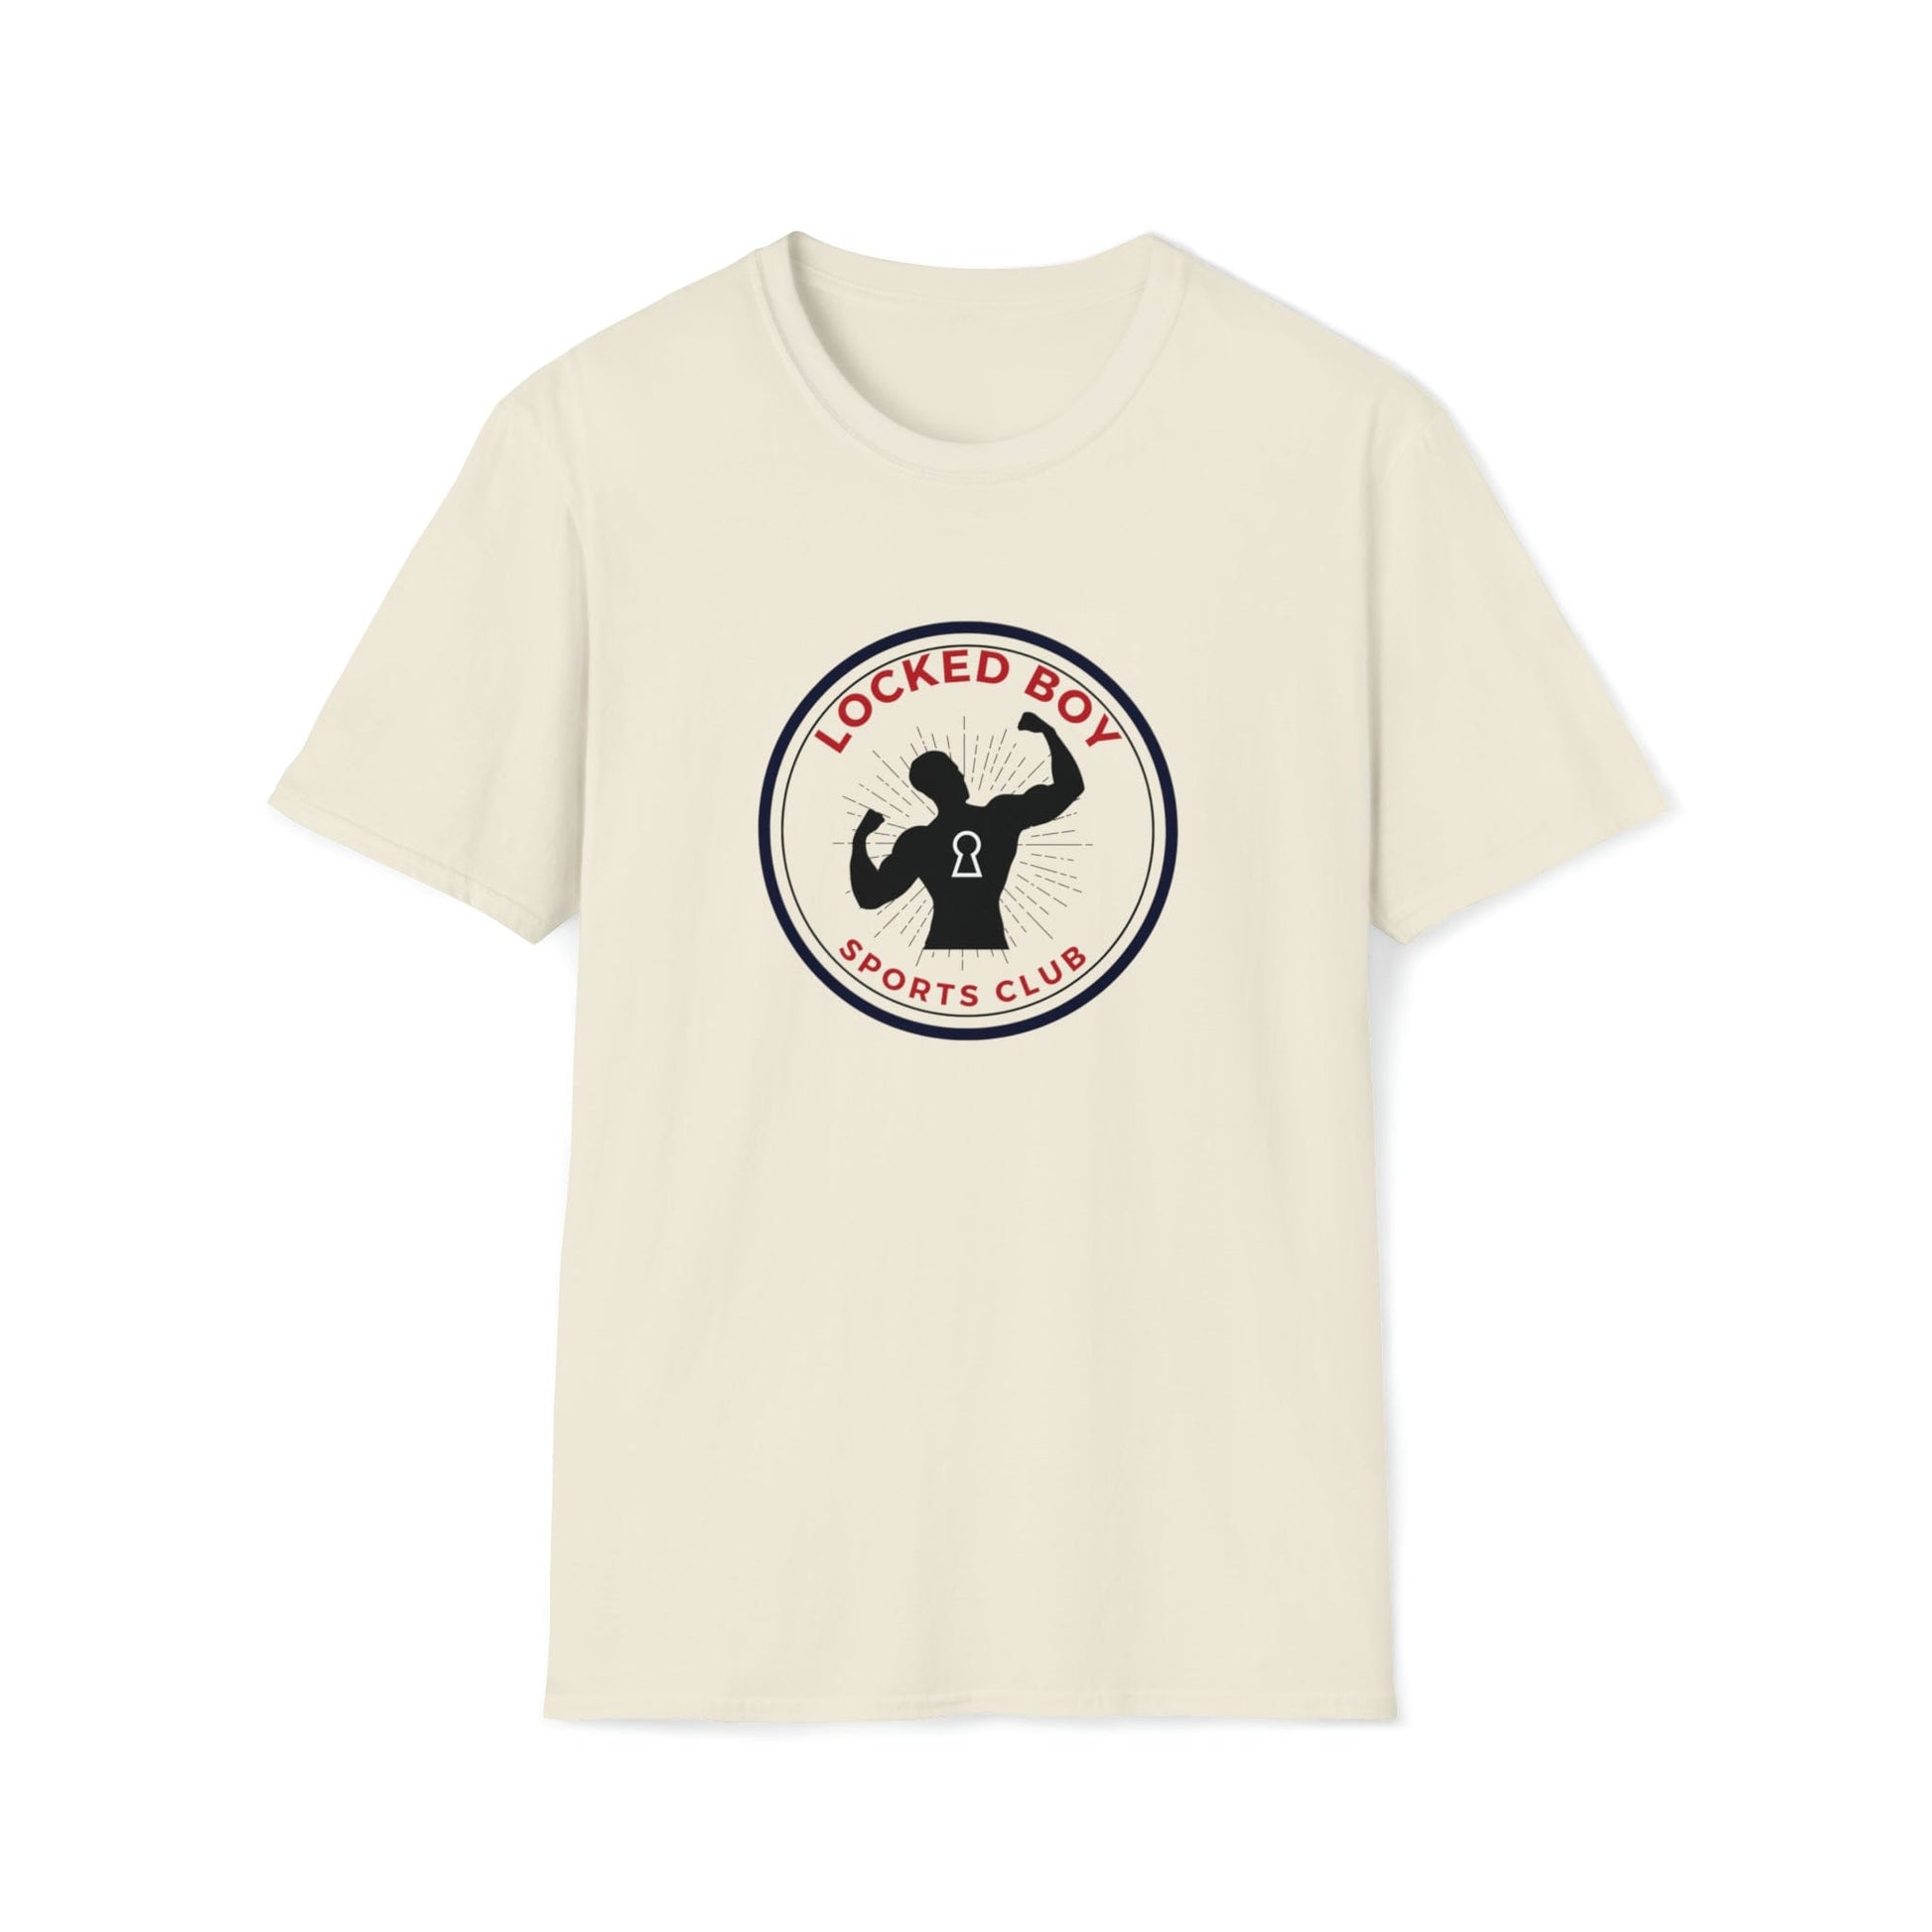 T-Shirt Natural / S LockedBoy Sports Club - Chastity Tshirt LEATHERDADDY BATOR